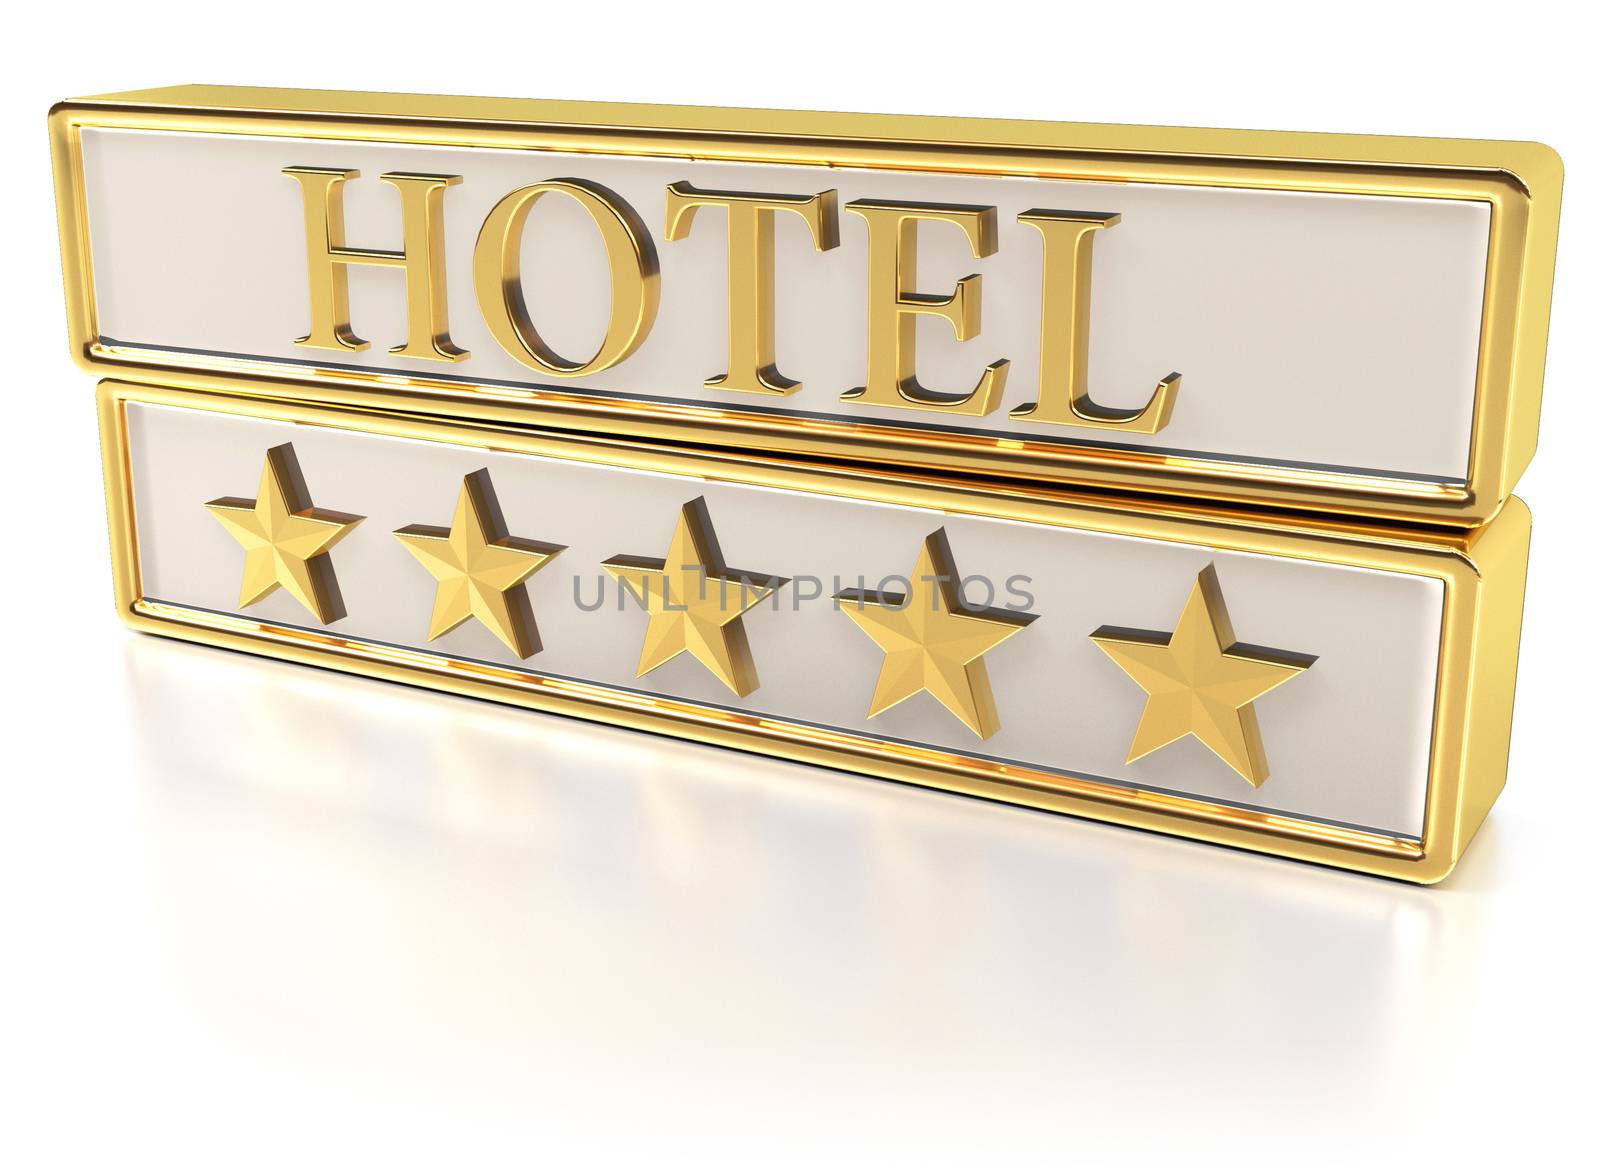 Hotel - Five gold stars by akaprinay